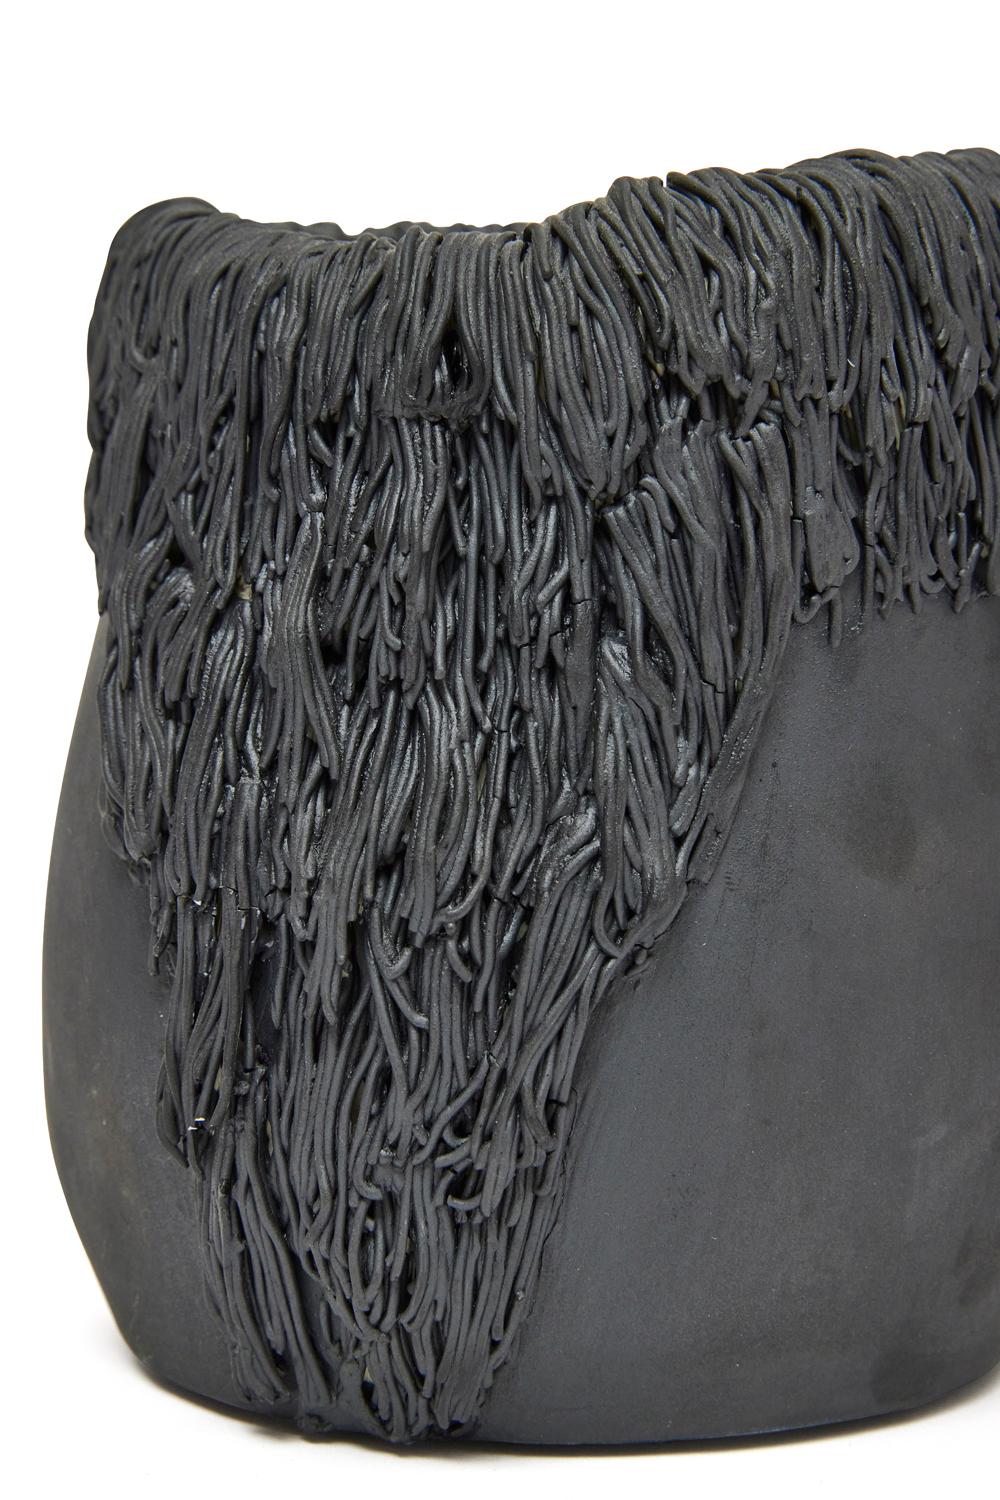 Contemporary Pom Vessel in Glazed Ceramic by Trish DeMasi For Sale